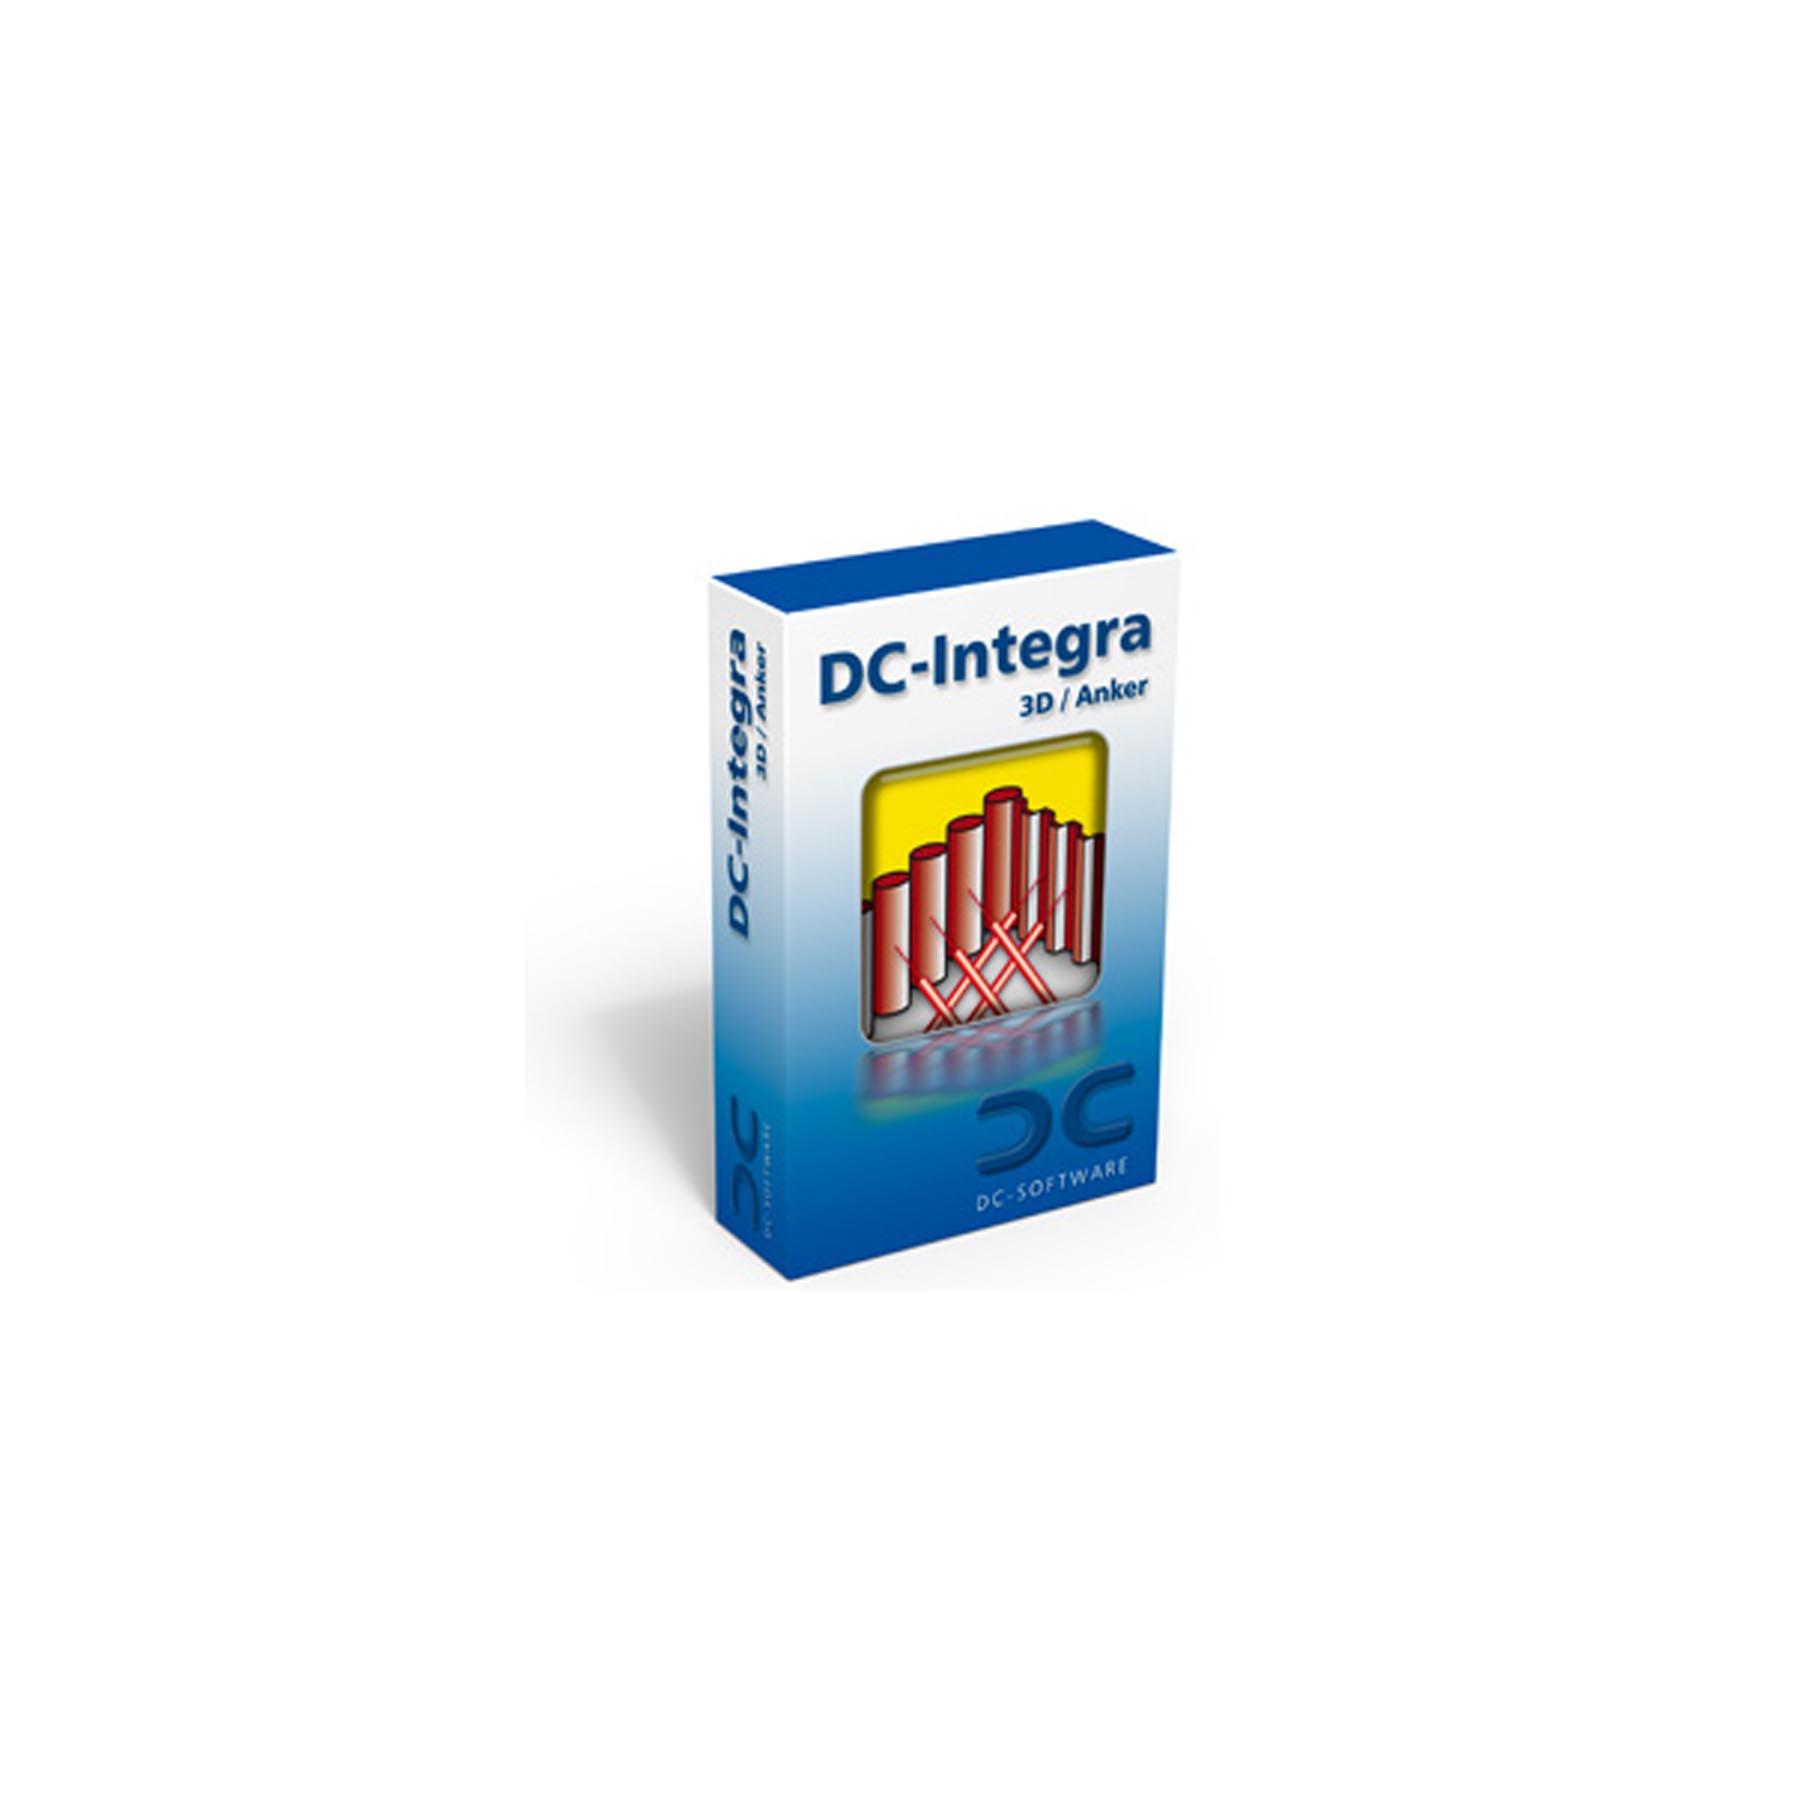 DC-Integra 3D/Anker